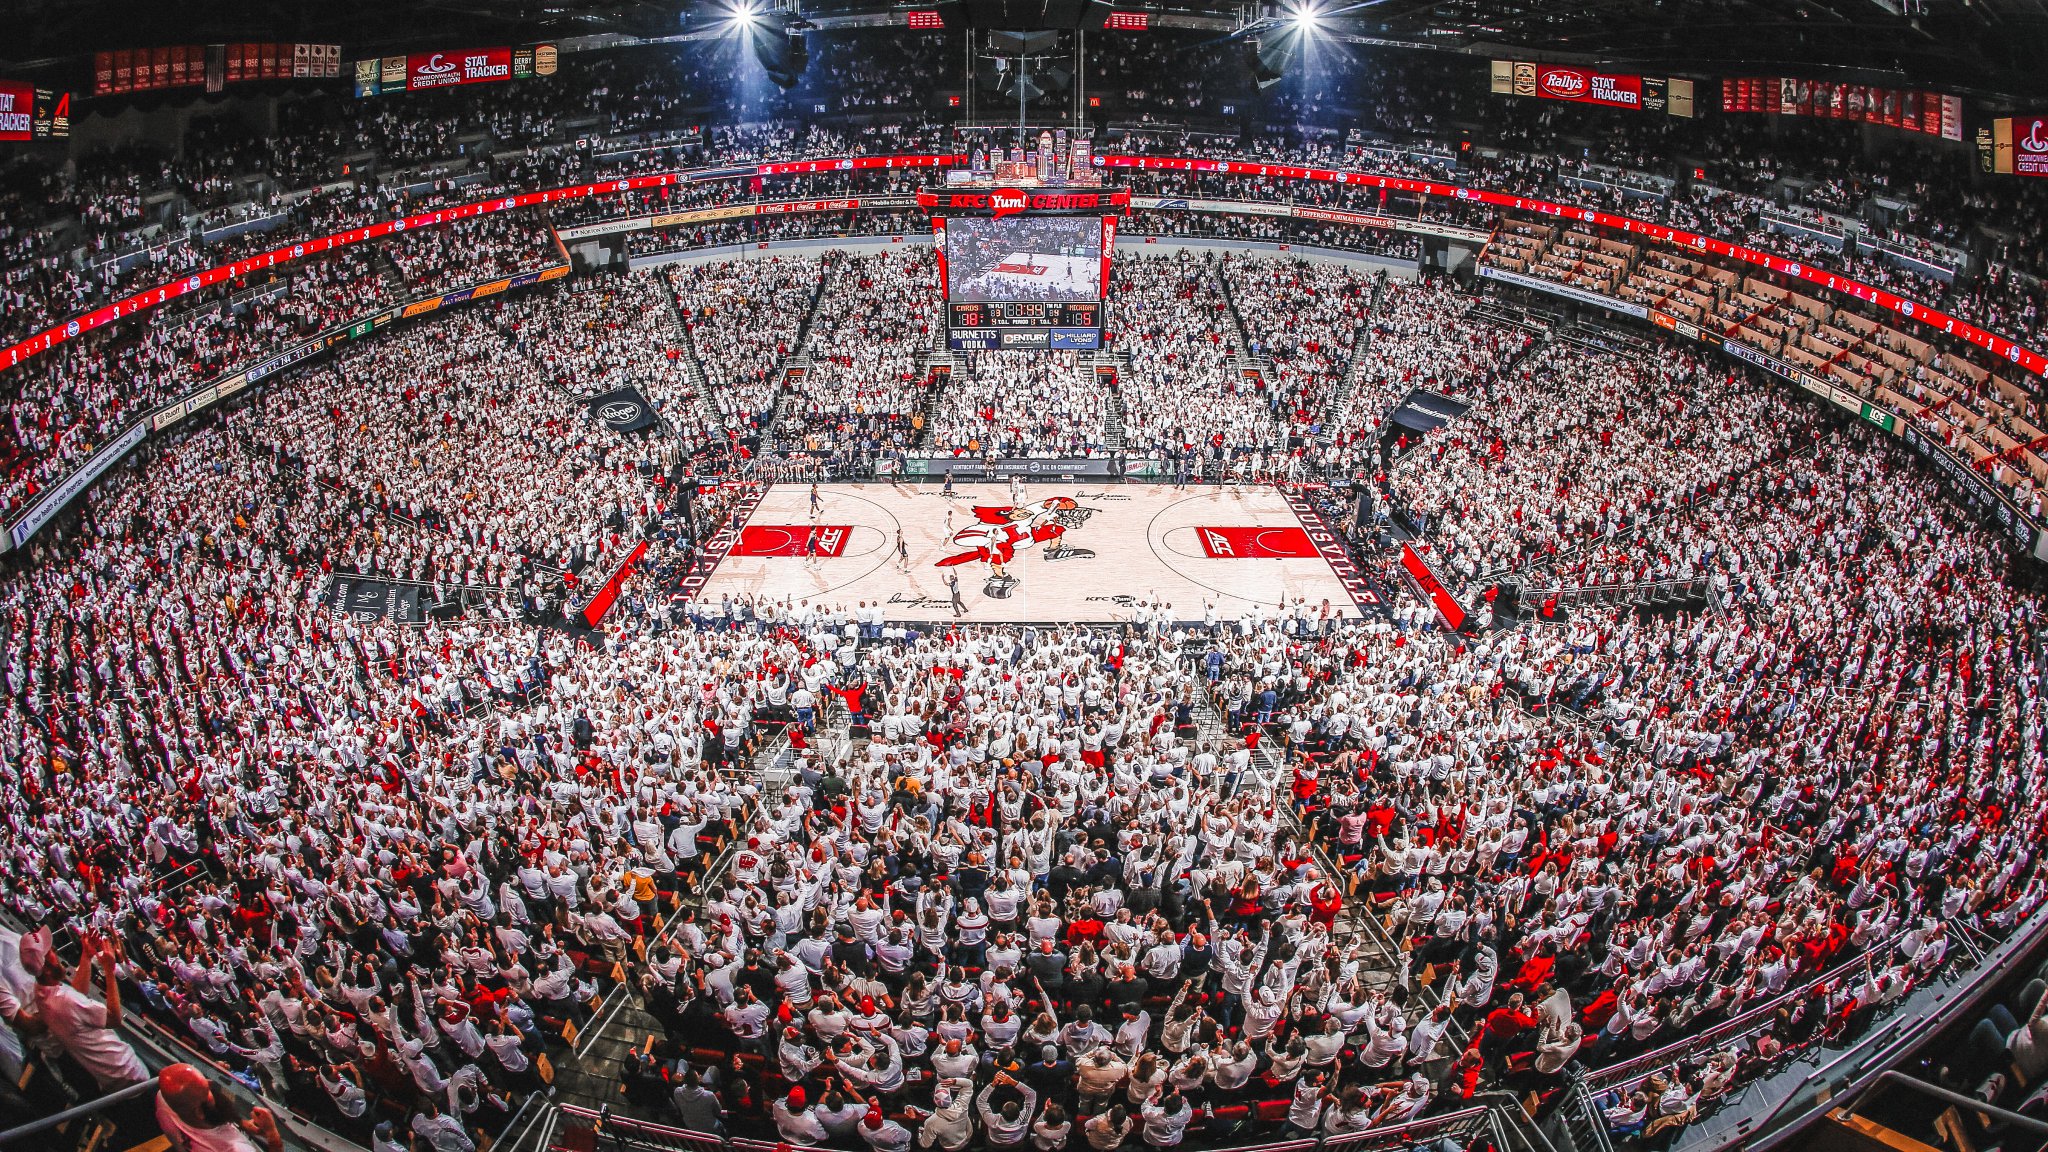 VIDEO: Jarrod West Talks Louisville Basketball – The Crunch Zone